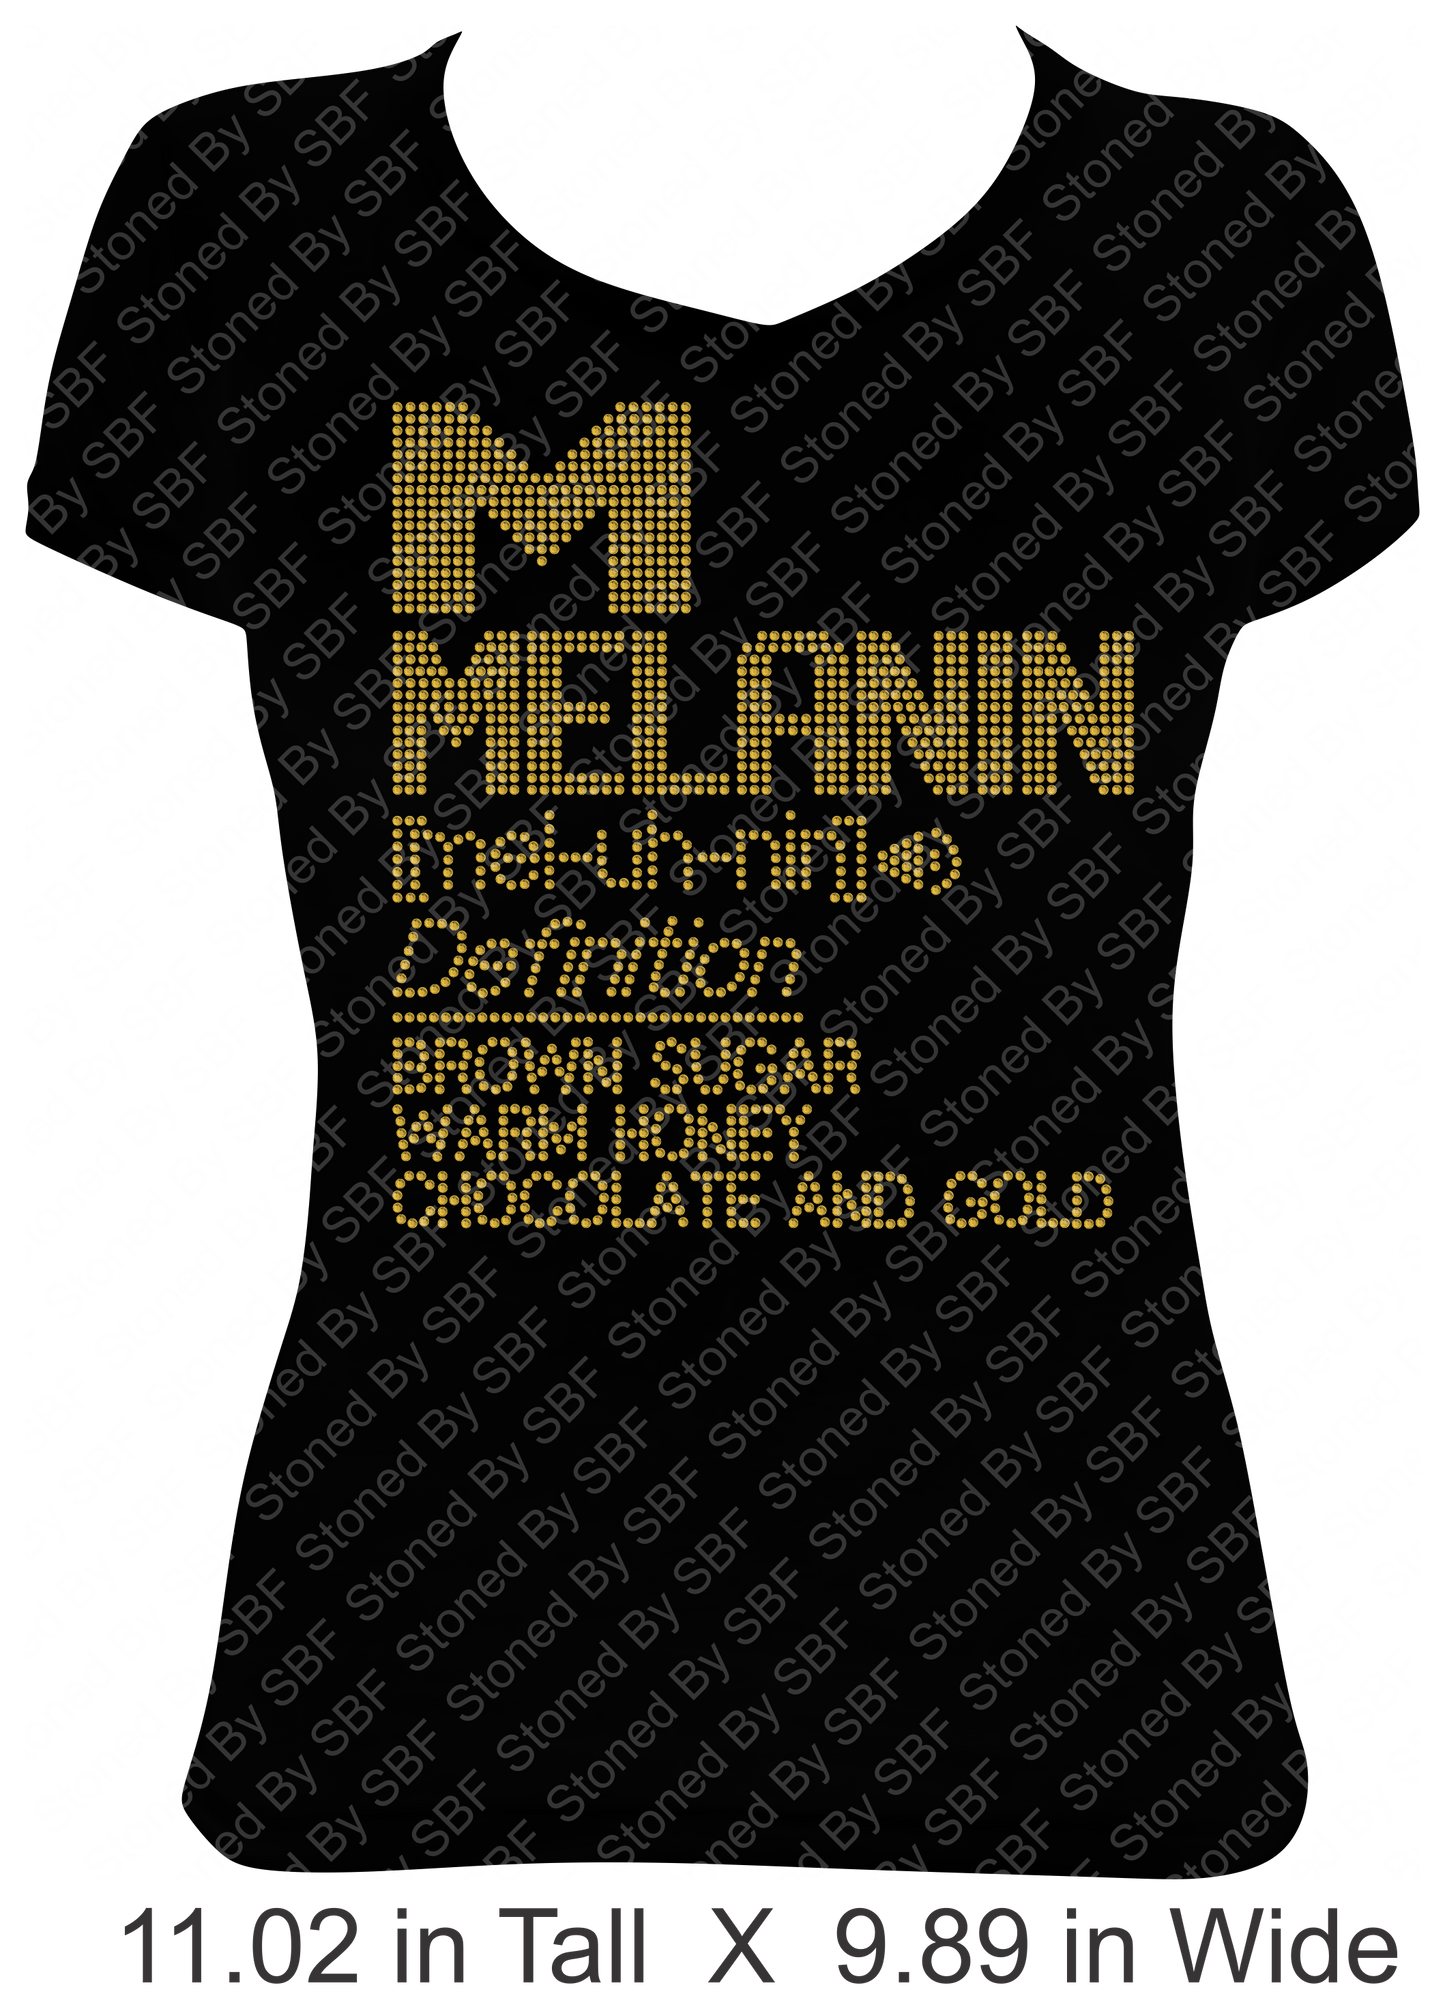 Definition of Melanin